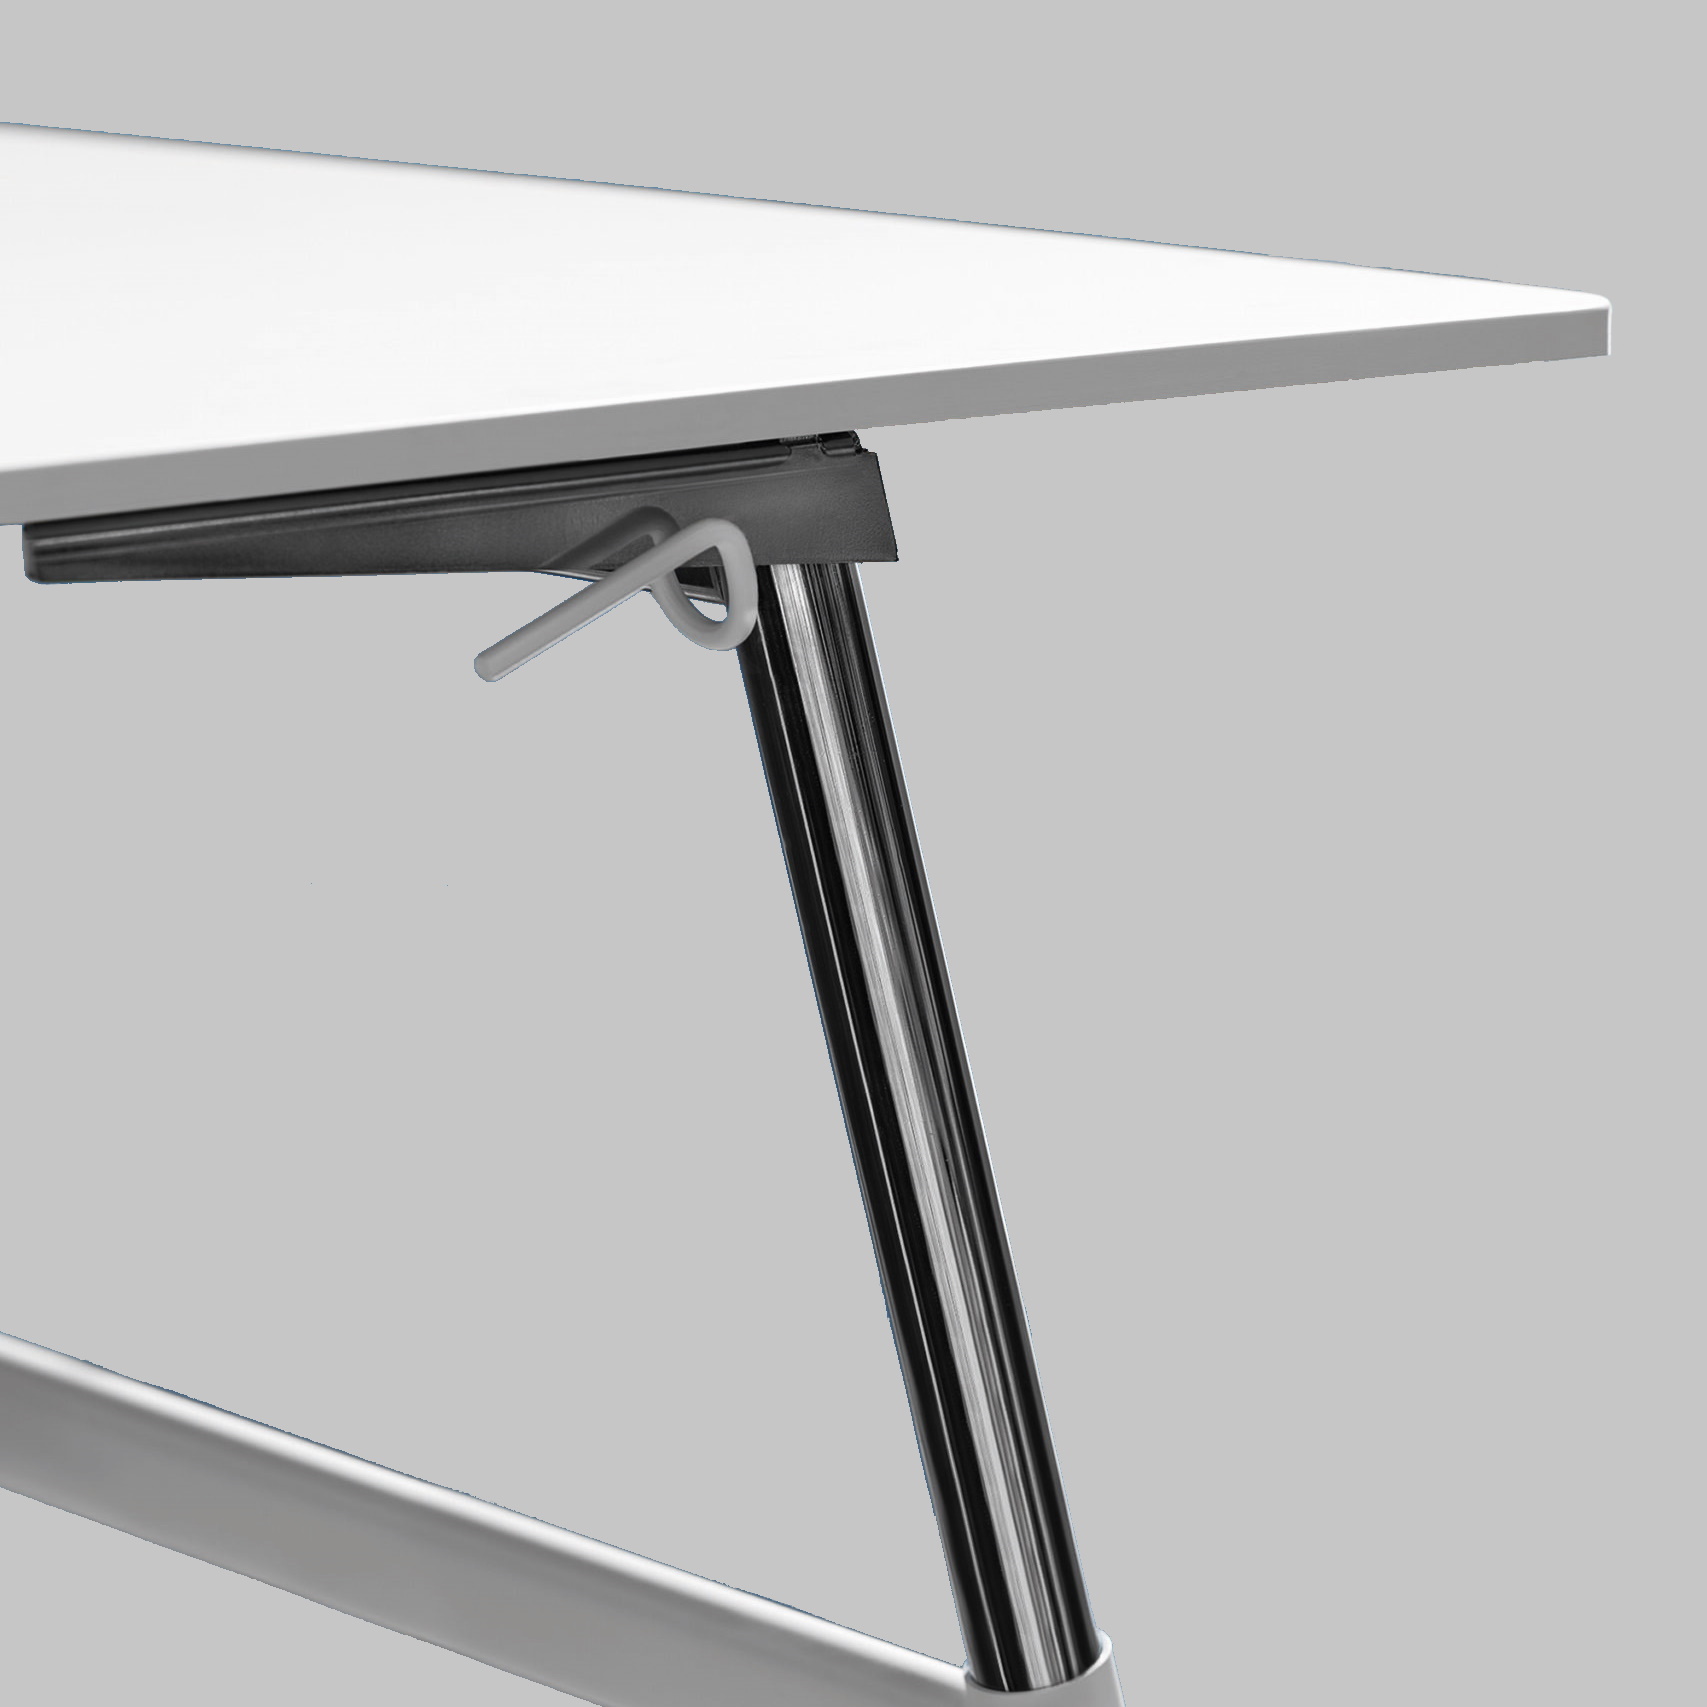 StandUp Desk, 960x620mm, white